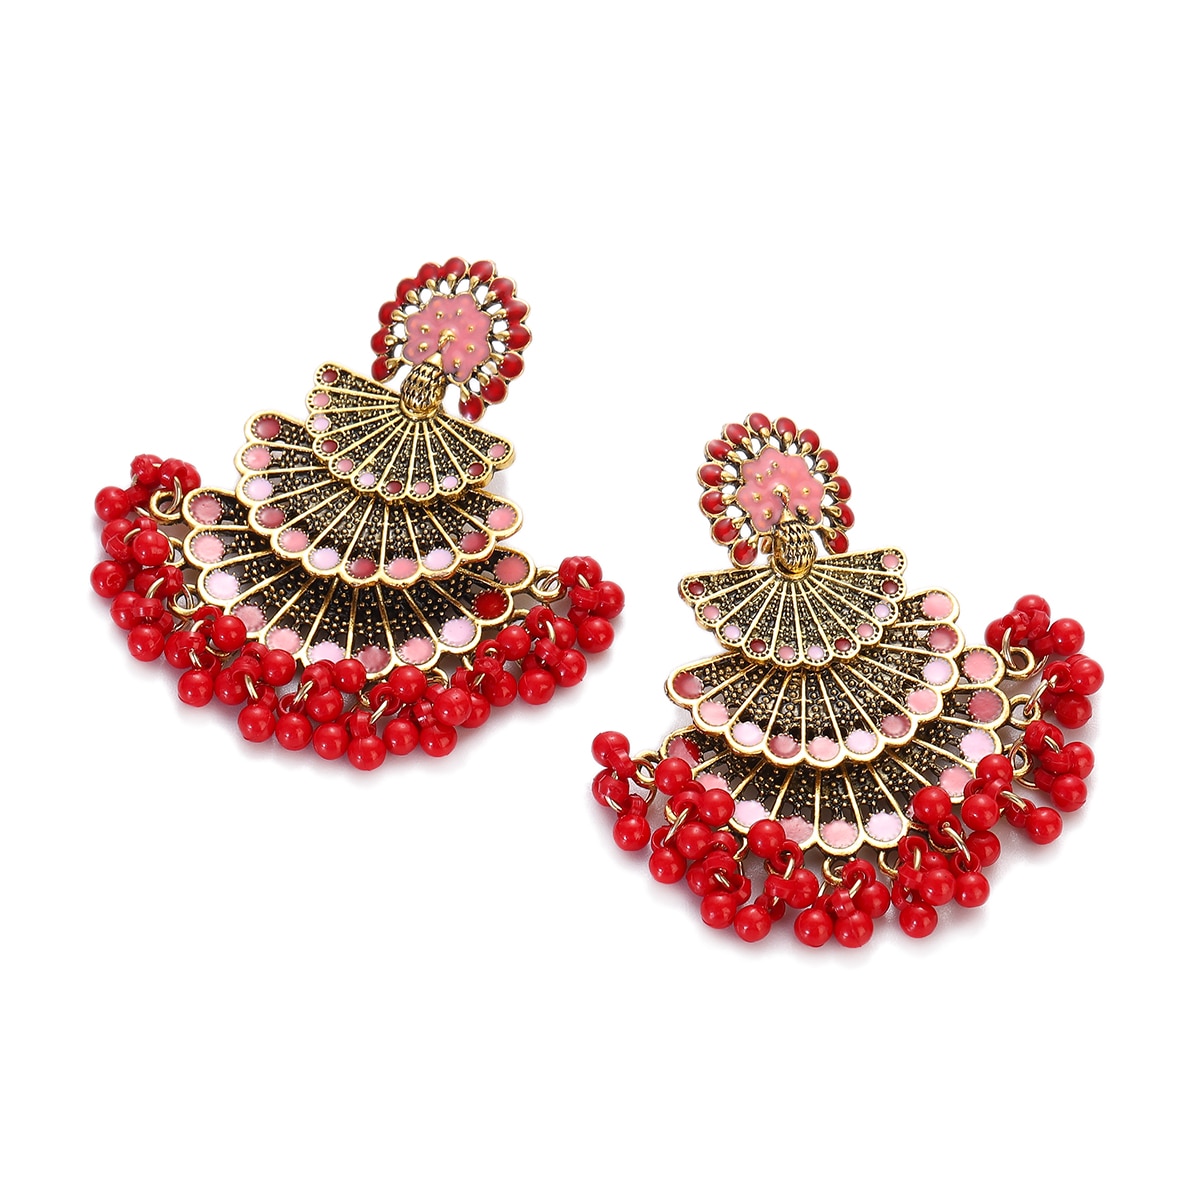 Indian-Jewellery-Red-White-Sector-Jhumka-Earrings-For-Women-Orecchini-Retro-Pearl-Beads-Tassel-Earri-1005004587102350-5